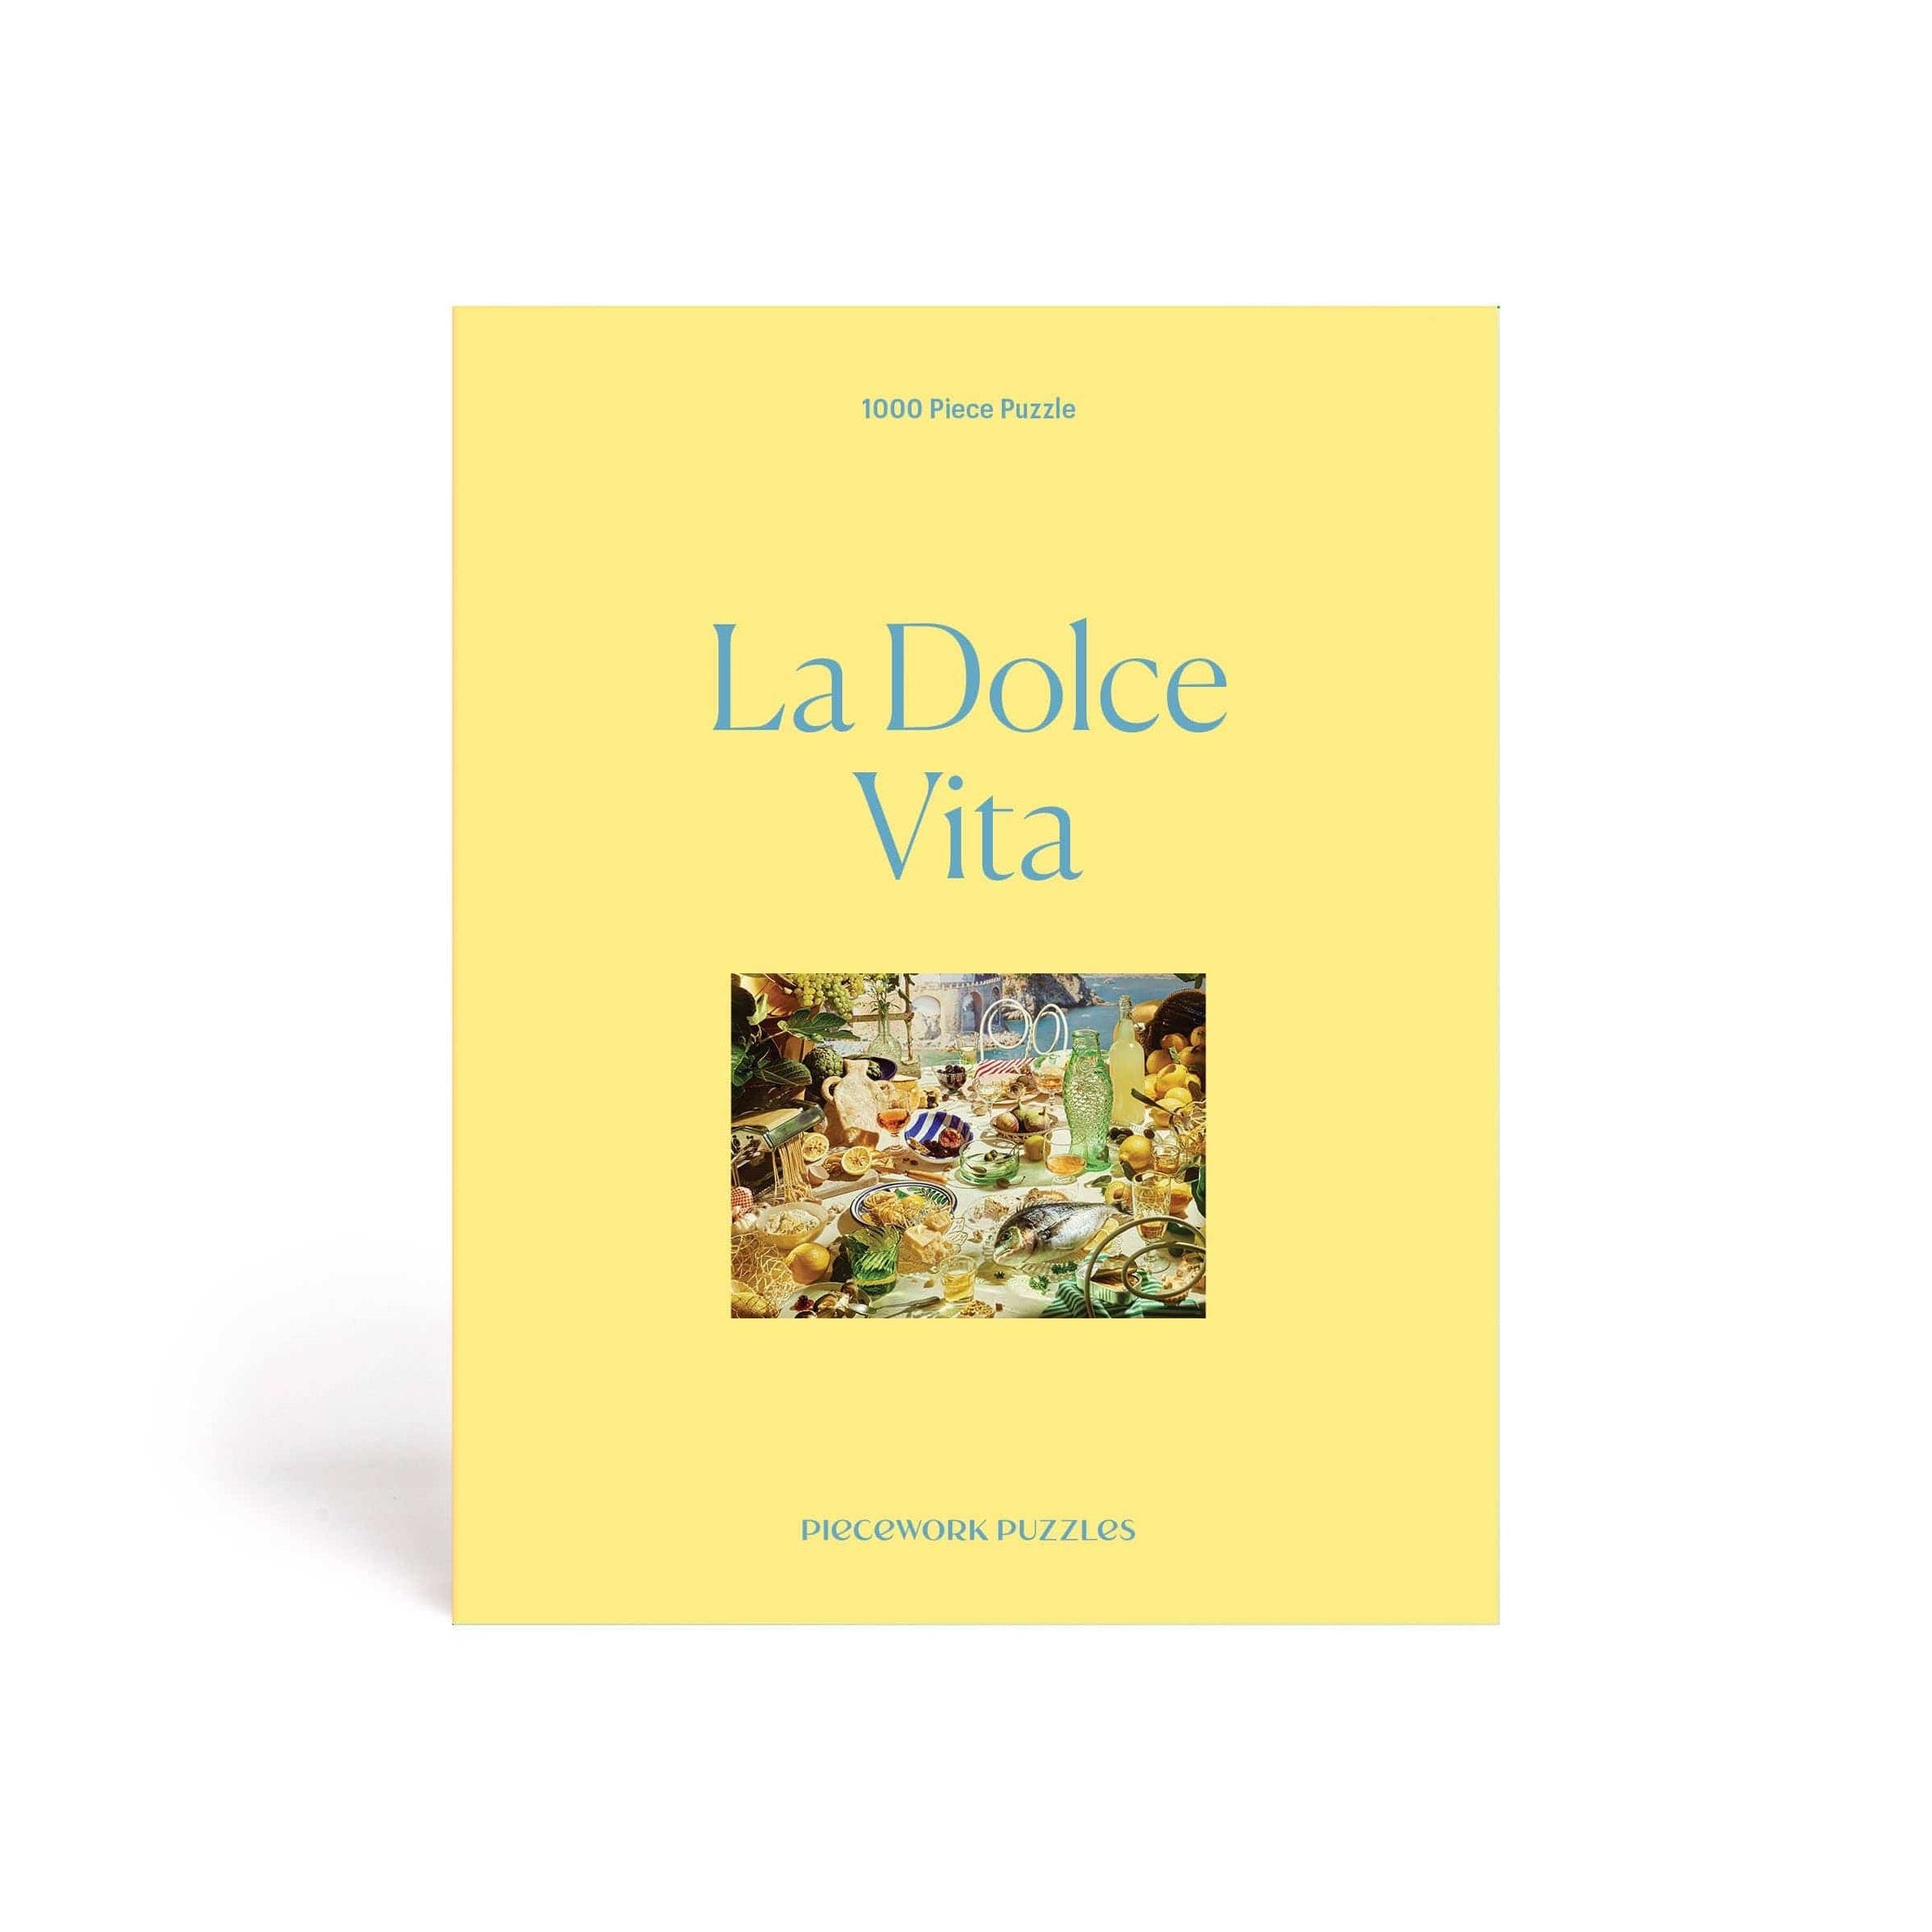 La Dolce Vita 1000 Piece Puzzle by Piecework Puzzles